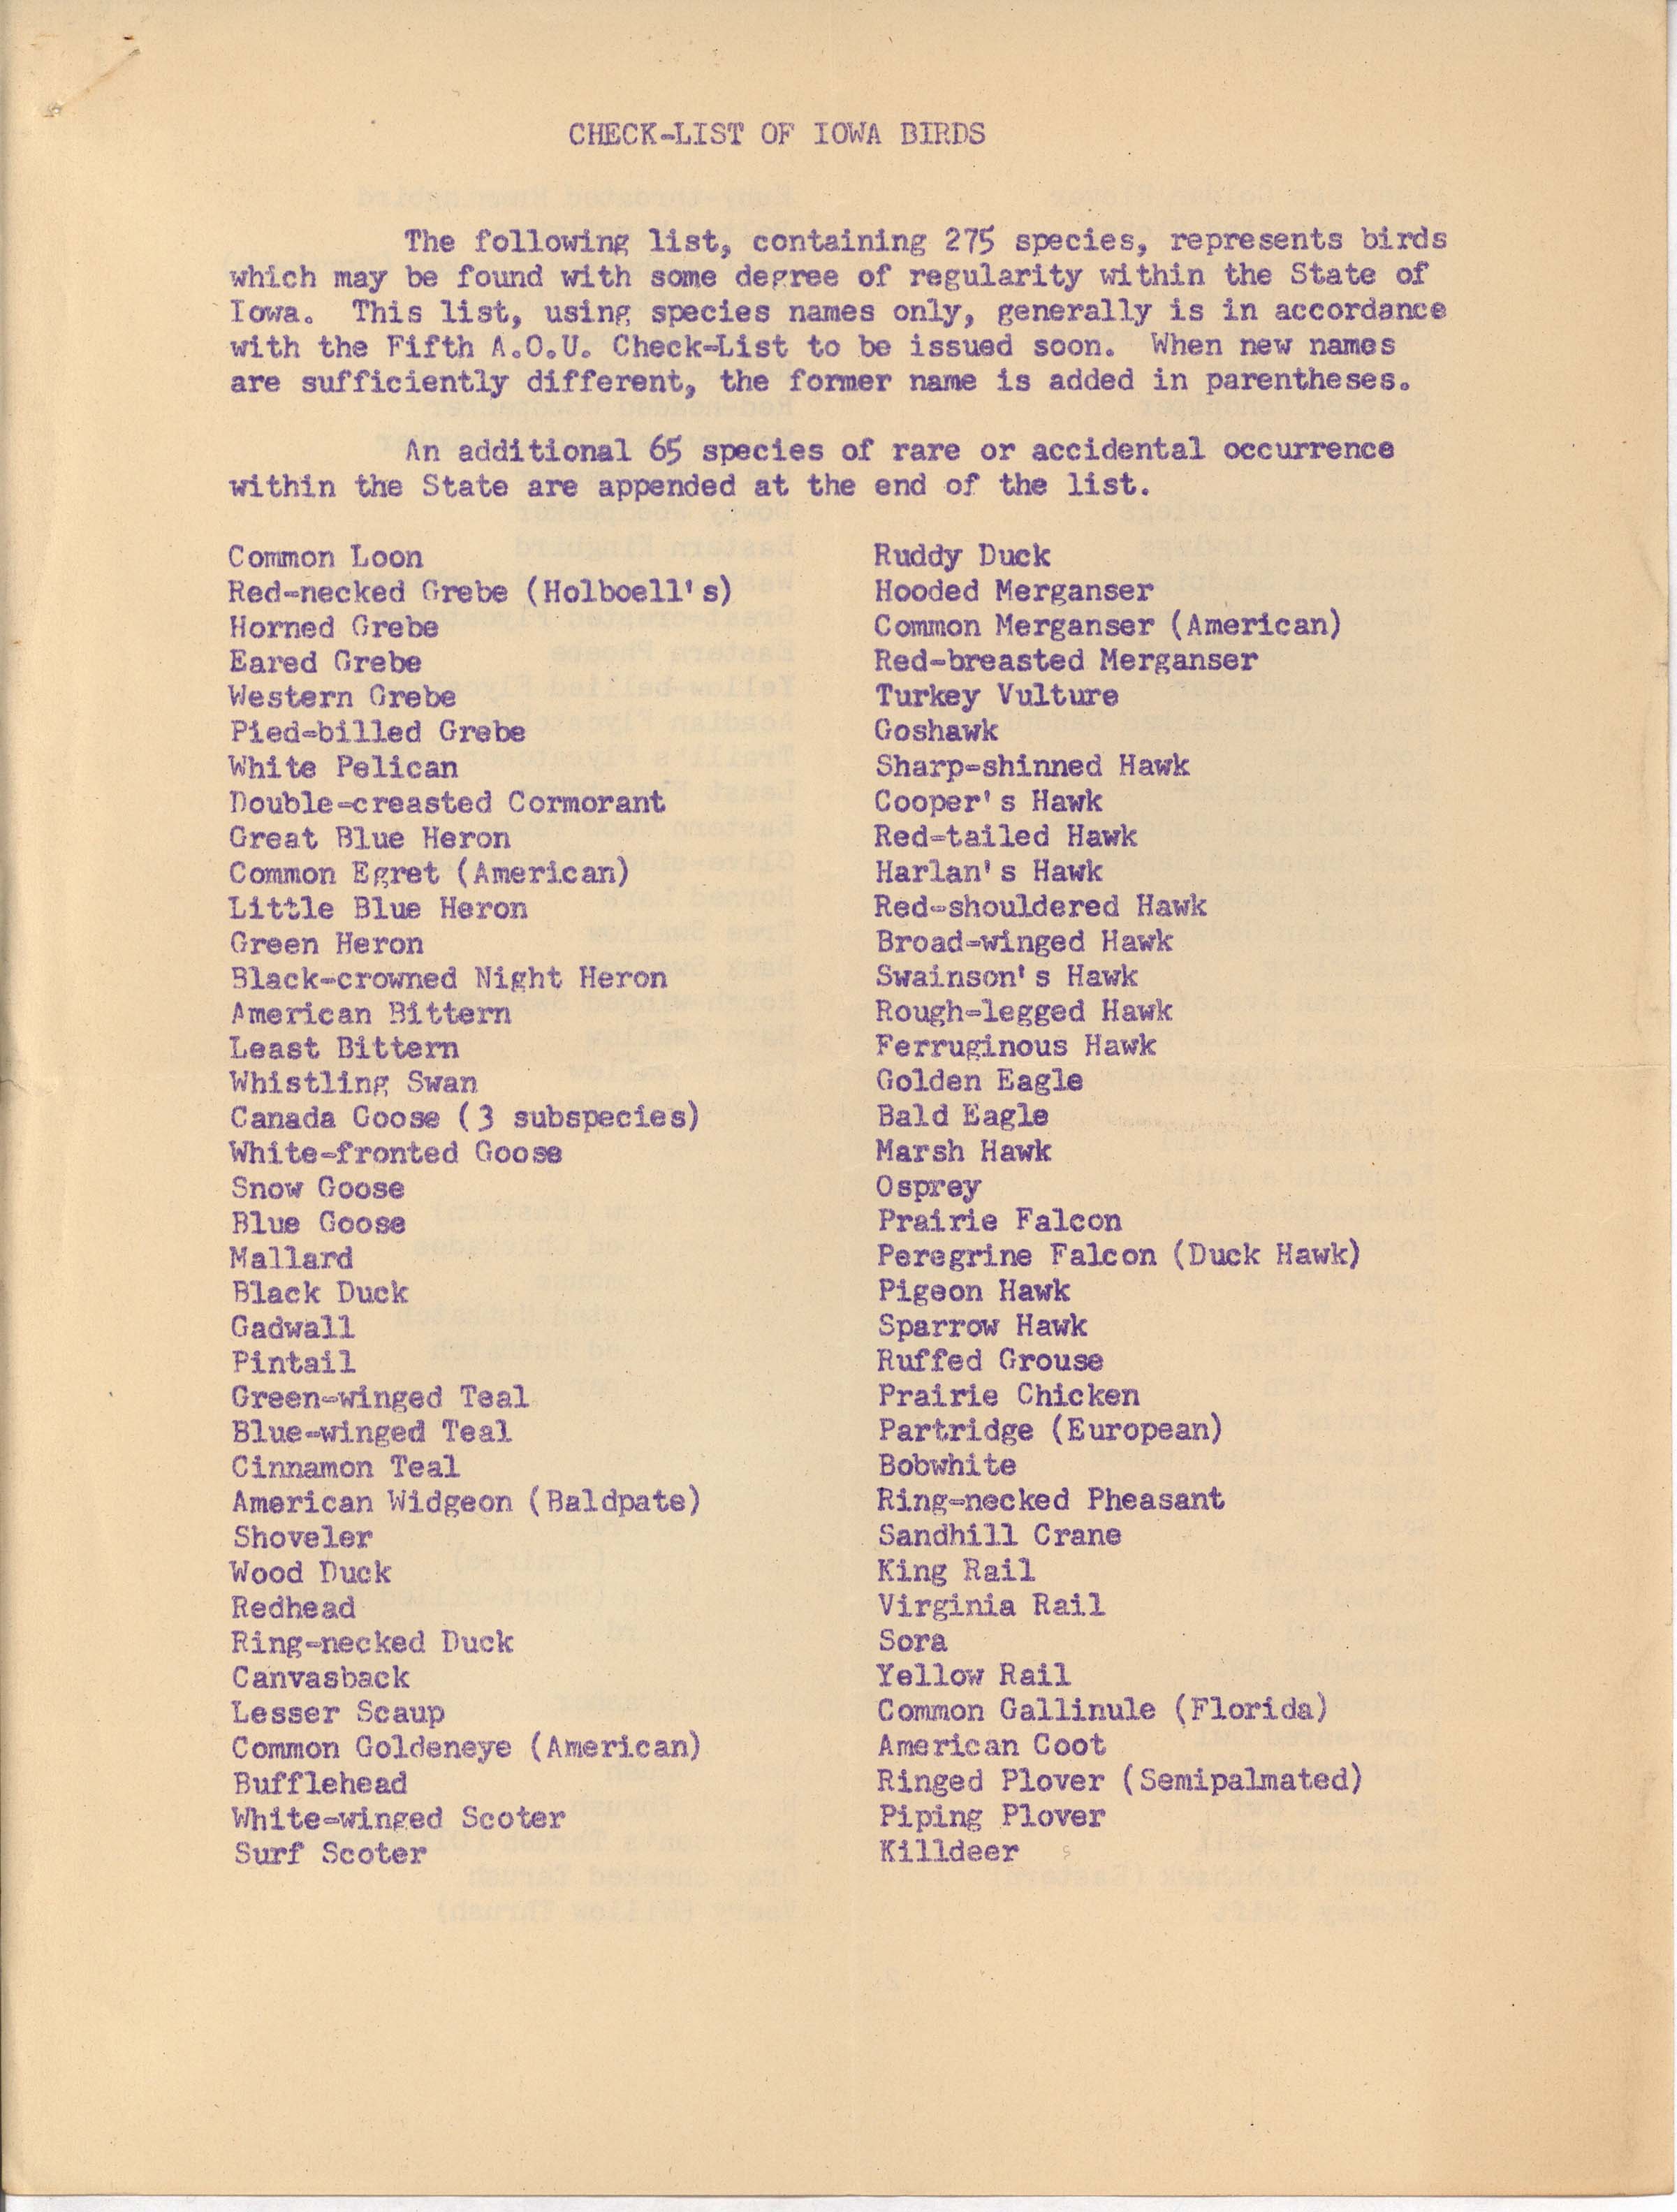 Check-list of Iowa Birds, prepared by Philip DuMont, April 22, 1954